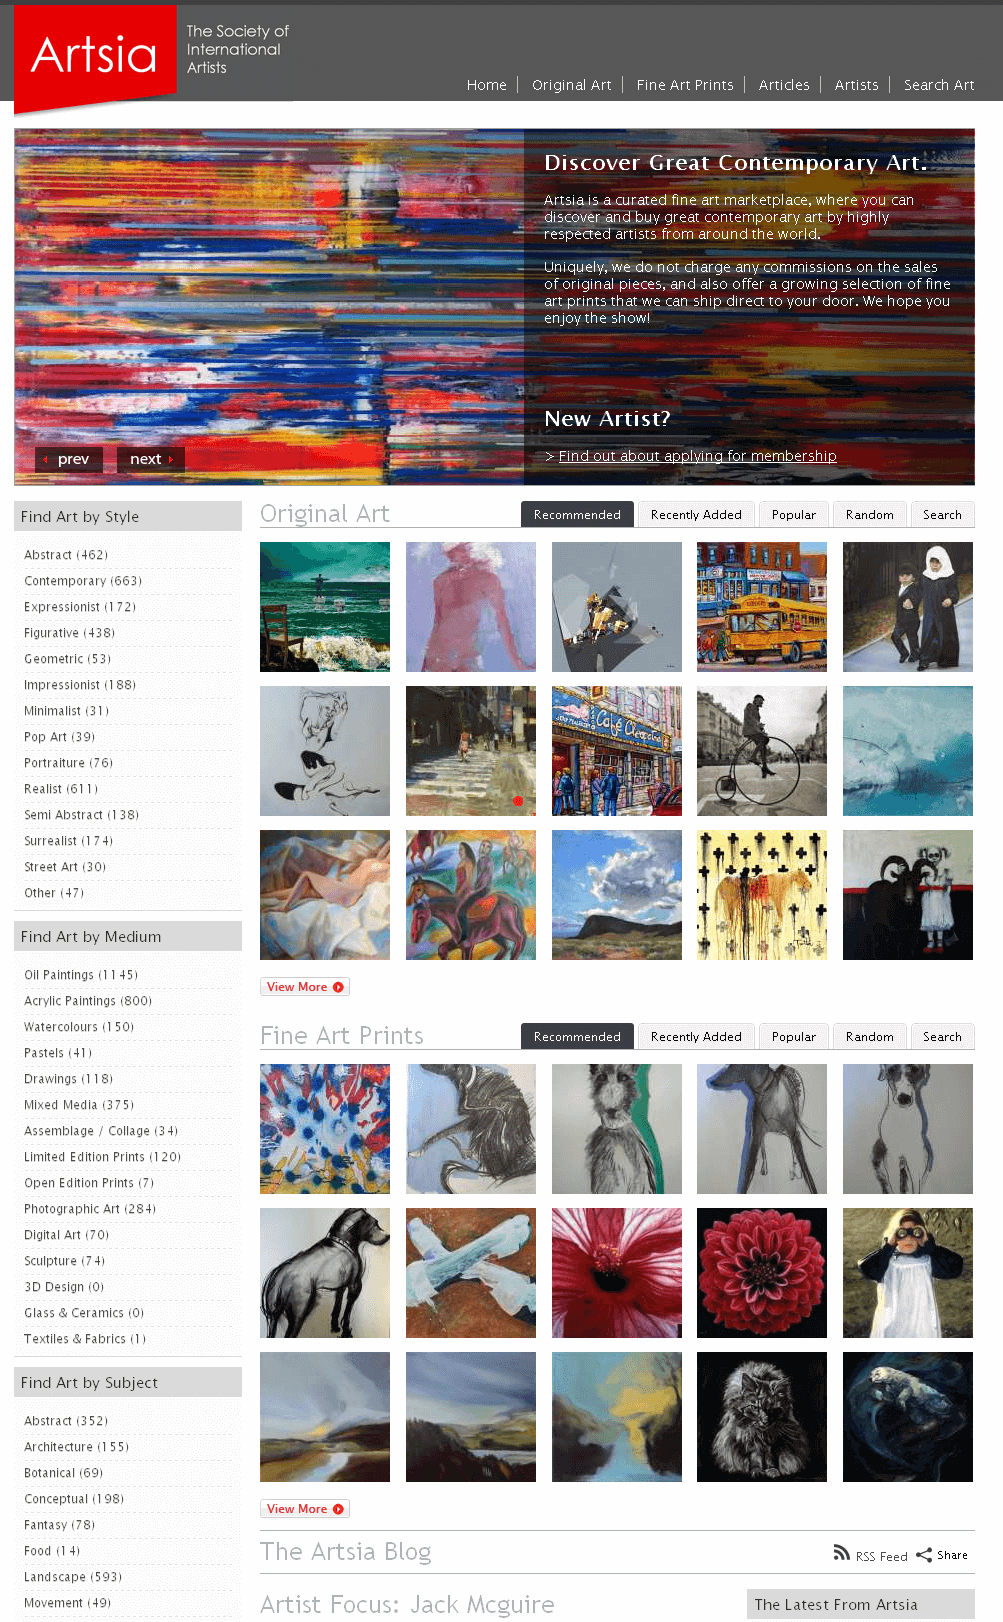  Drupal Based Website - The Society for International Artists